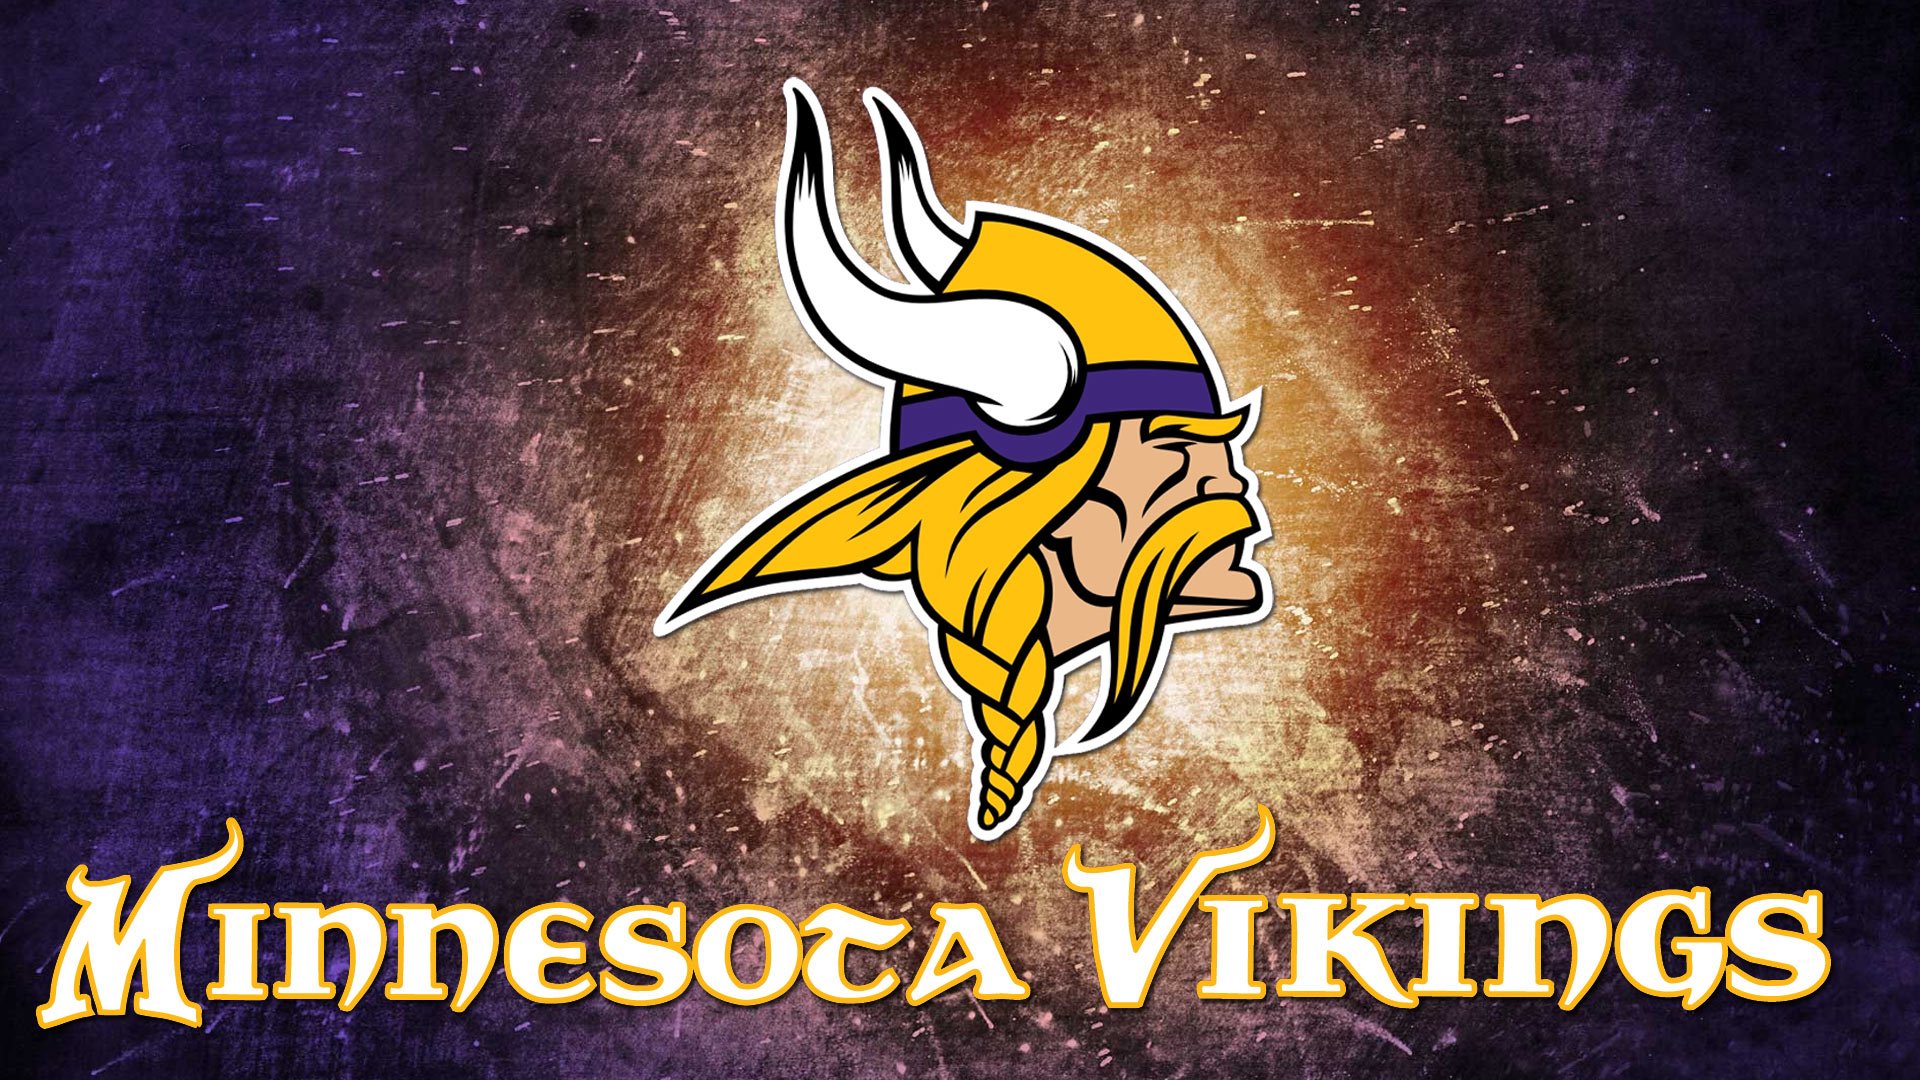 Minnesota Vikings logo Hd 1080p high quality Wallpaper screen size